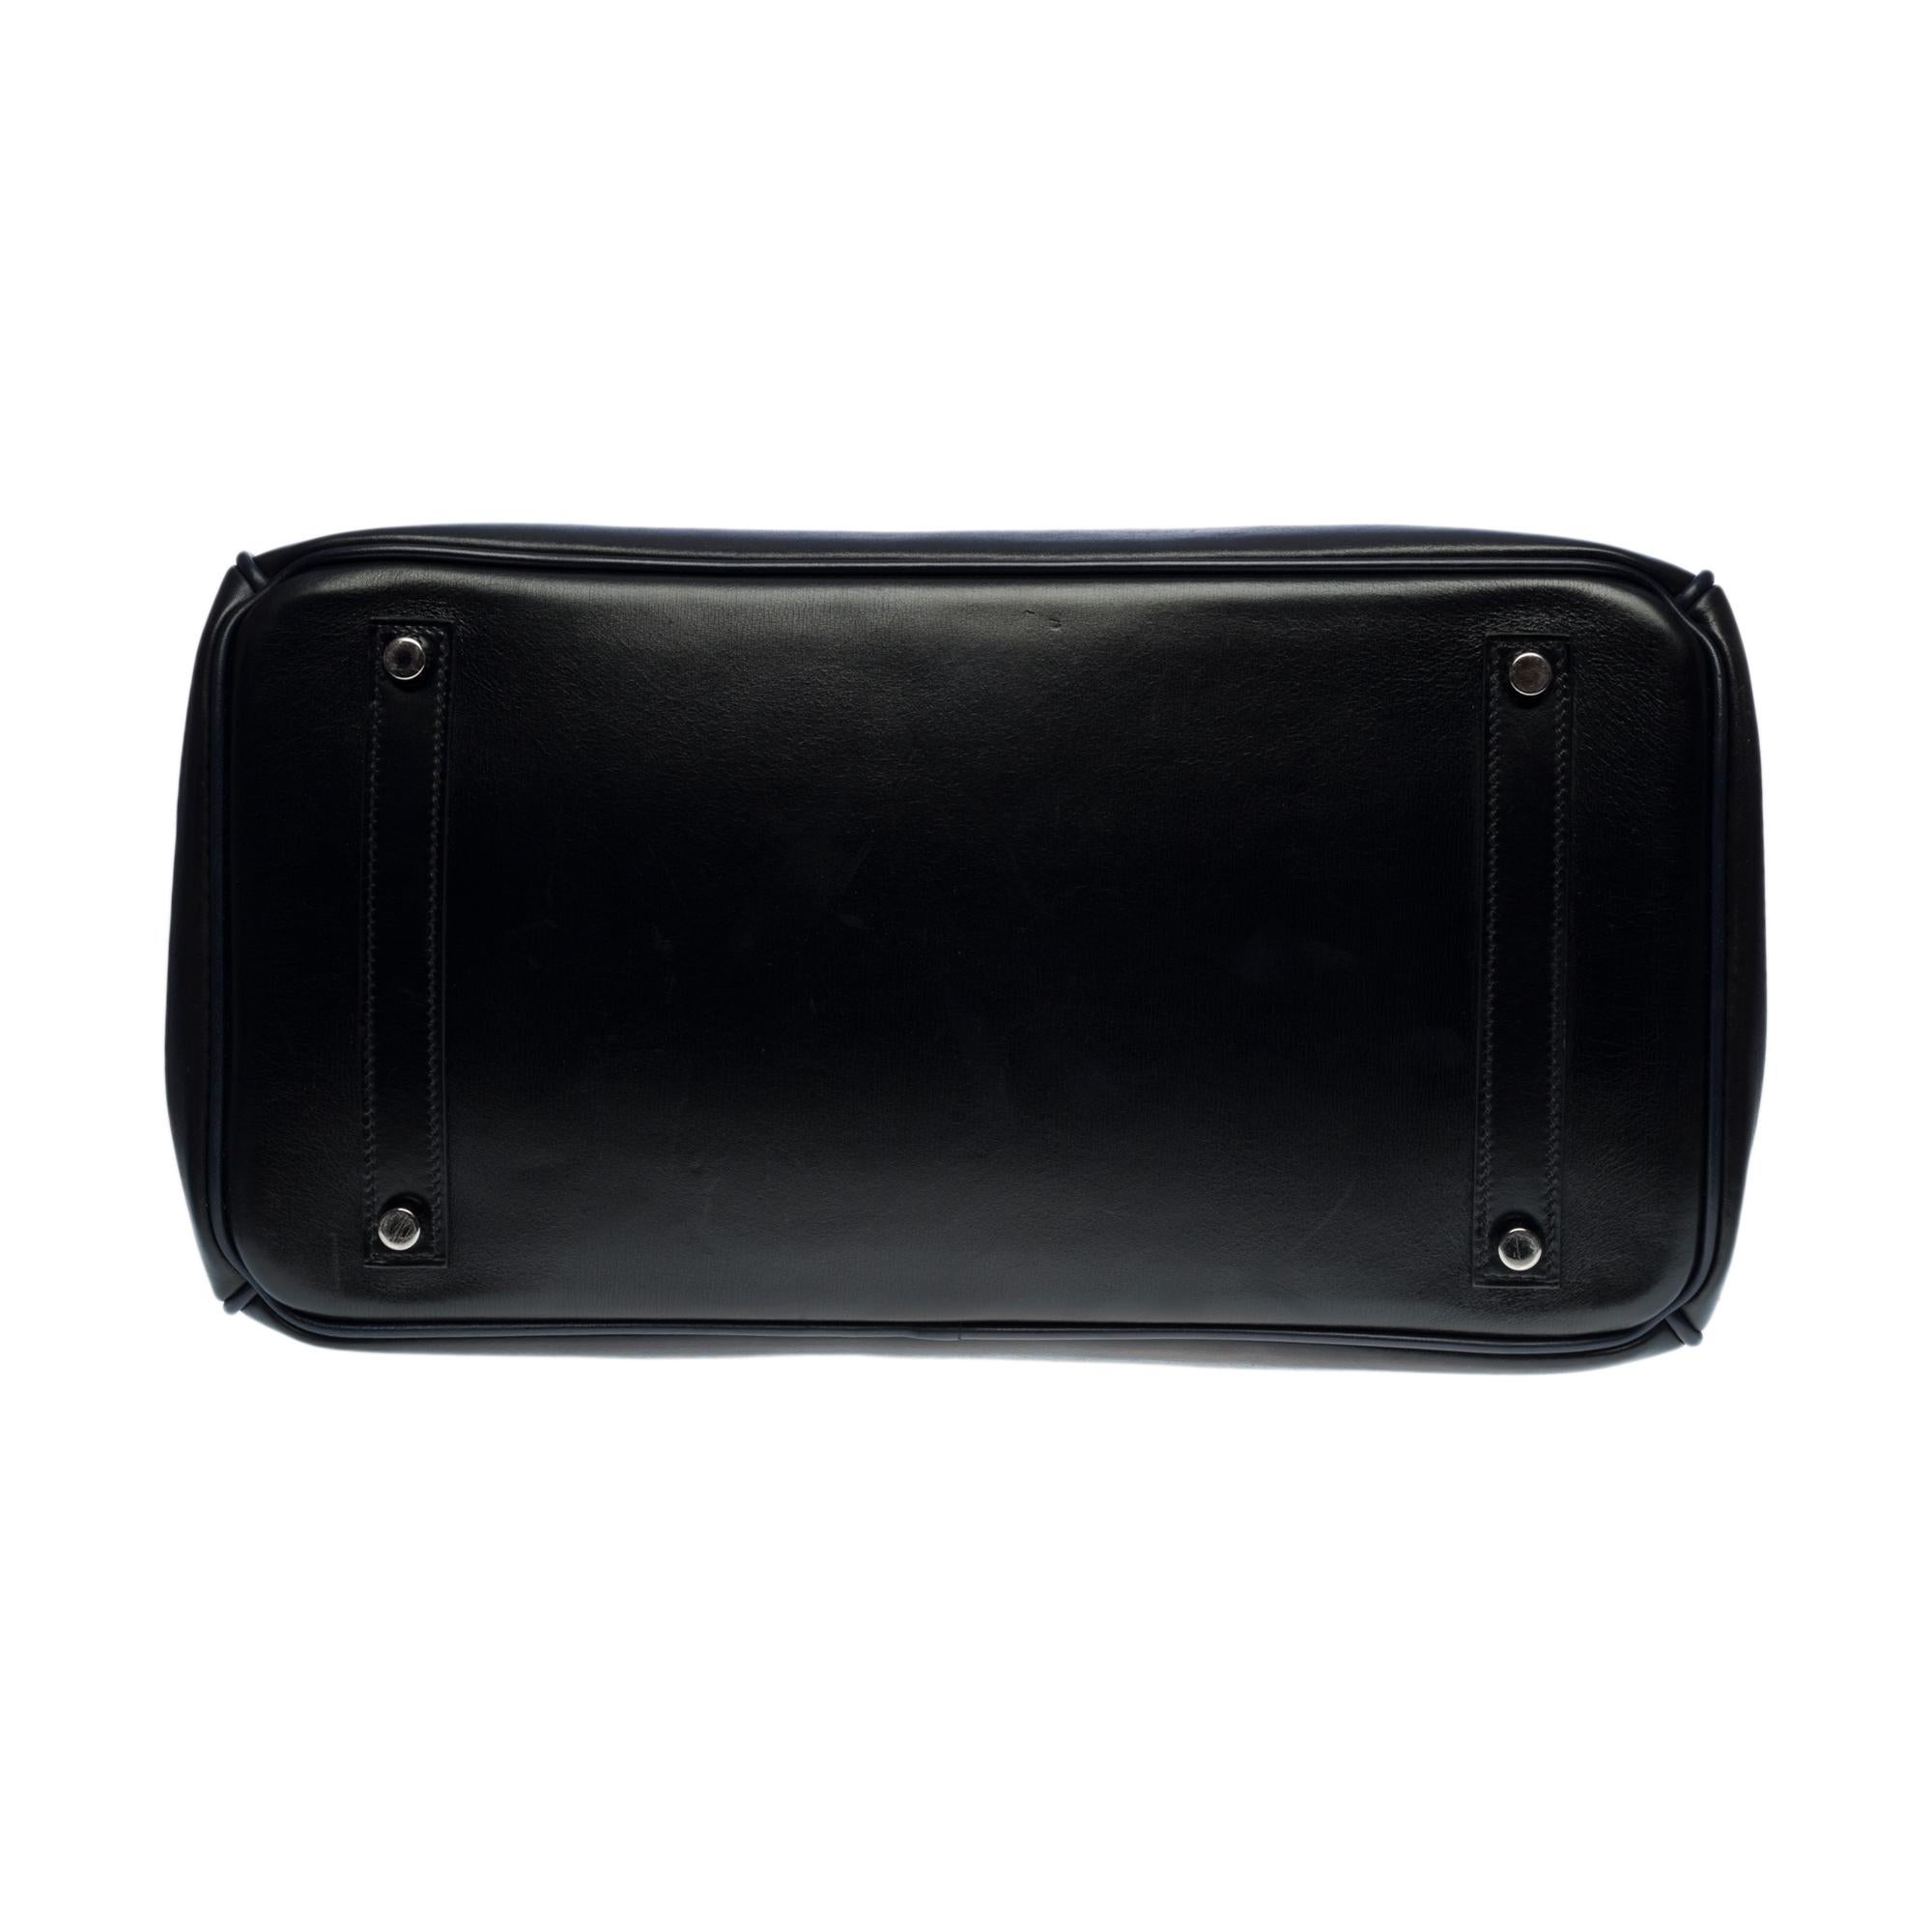 Amazing & Rare Hermès Birkin 35 handbag in black box calfskin leather, SHW 3